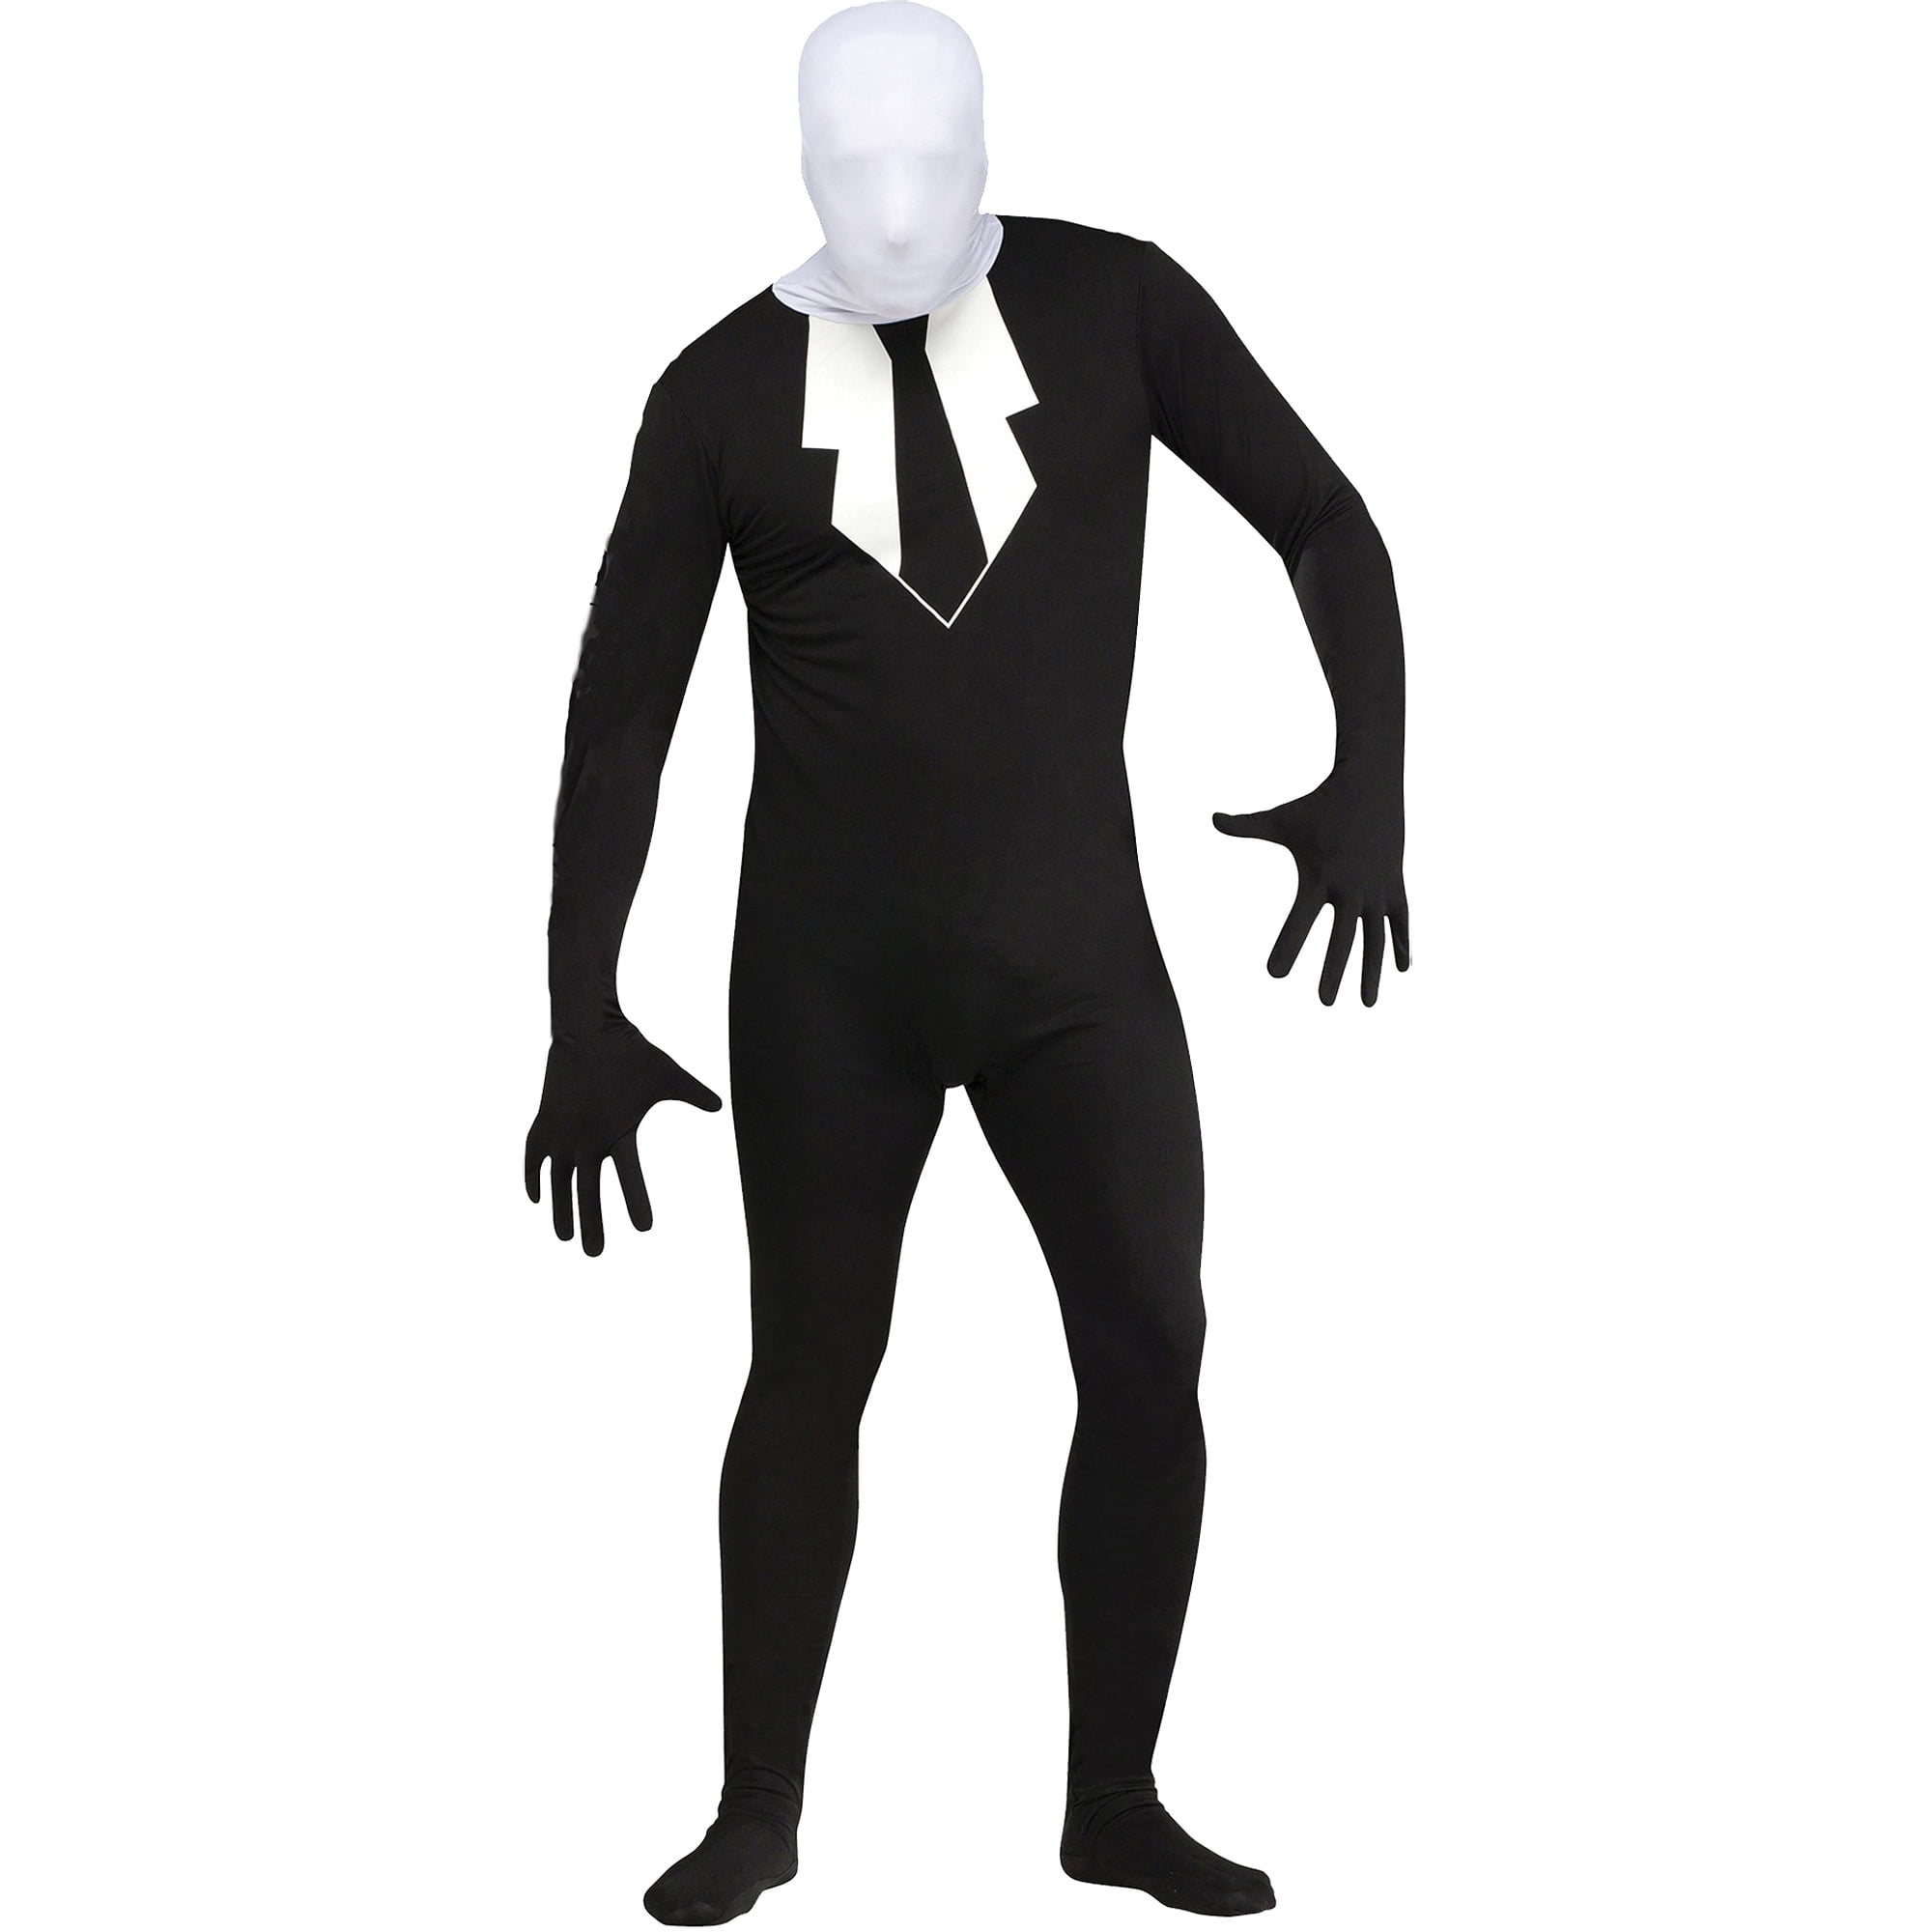  Skinny  Man Skin Suit Adult Halloween  Costume  Walmart com 